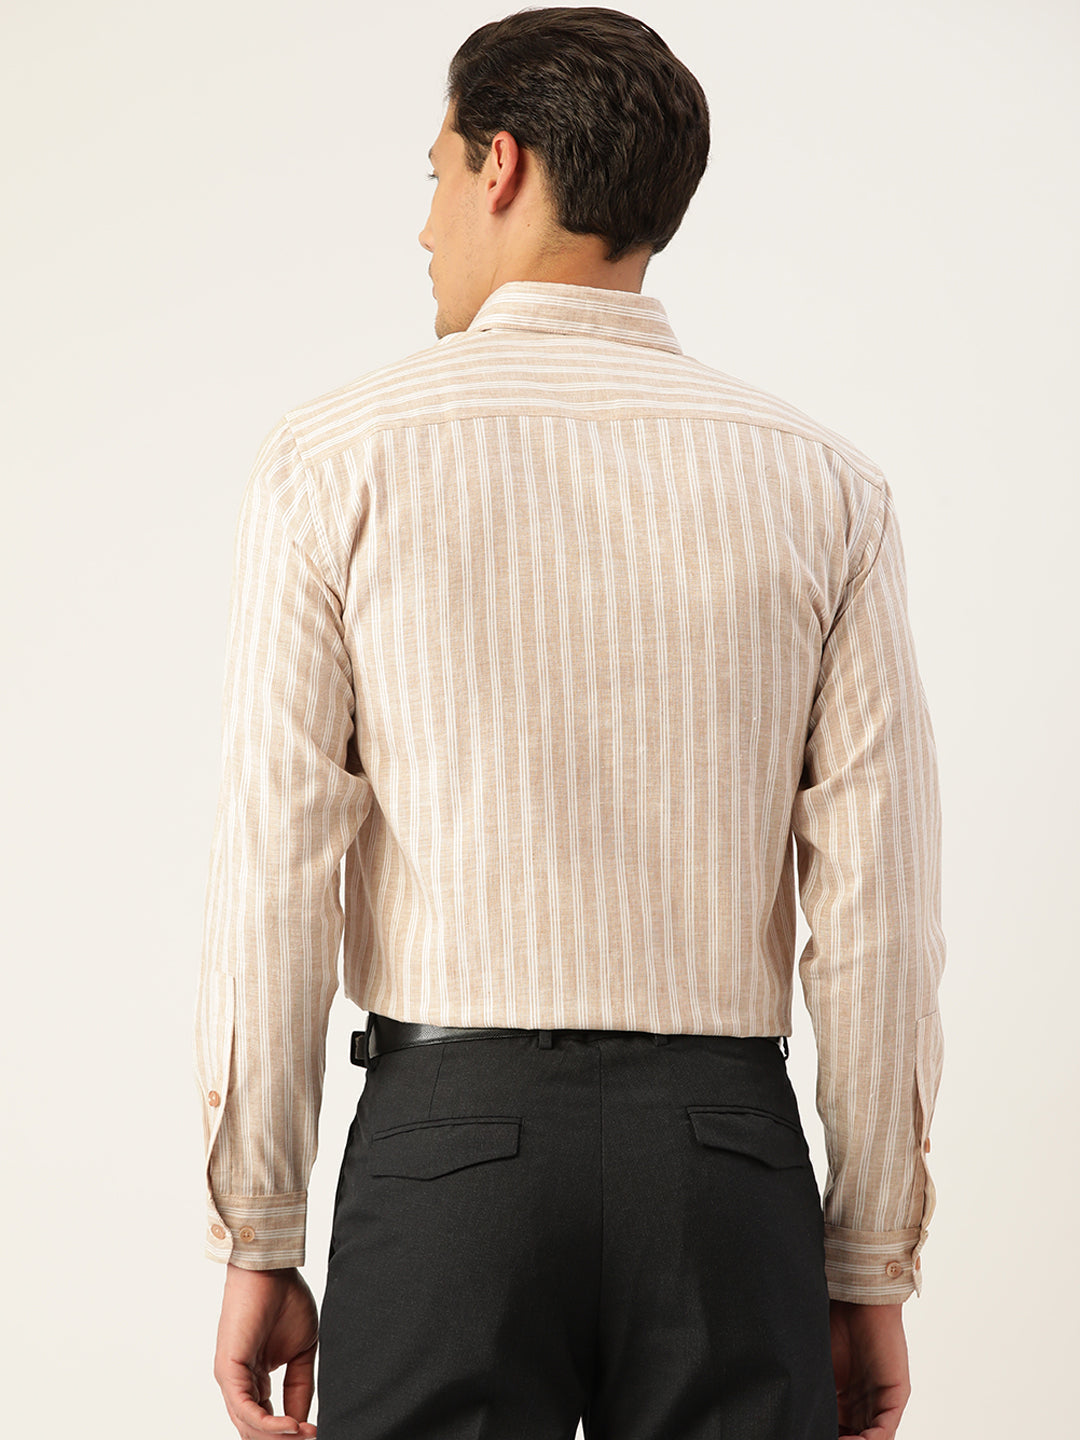 Men's  Cotton Striped Formal Shirts ( SF 795Beige ) - Jainish